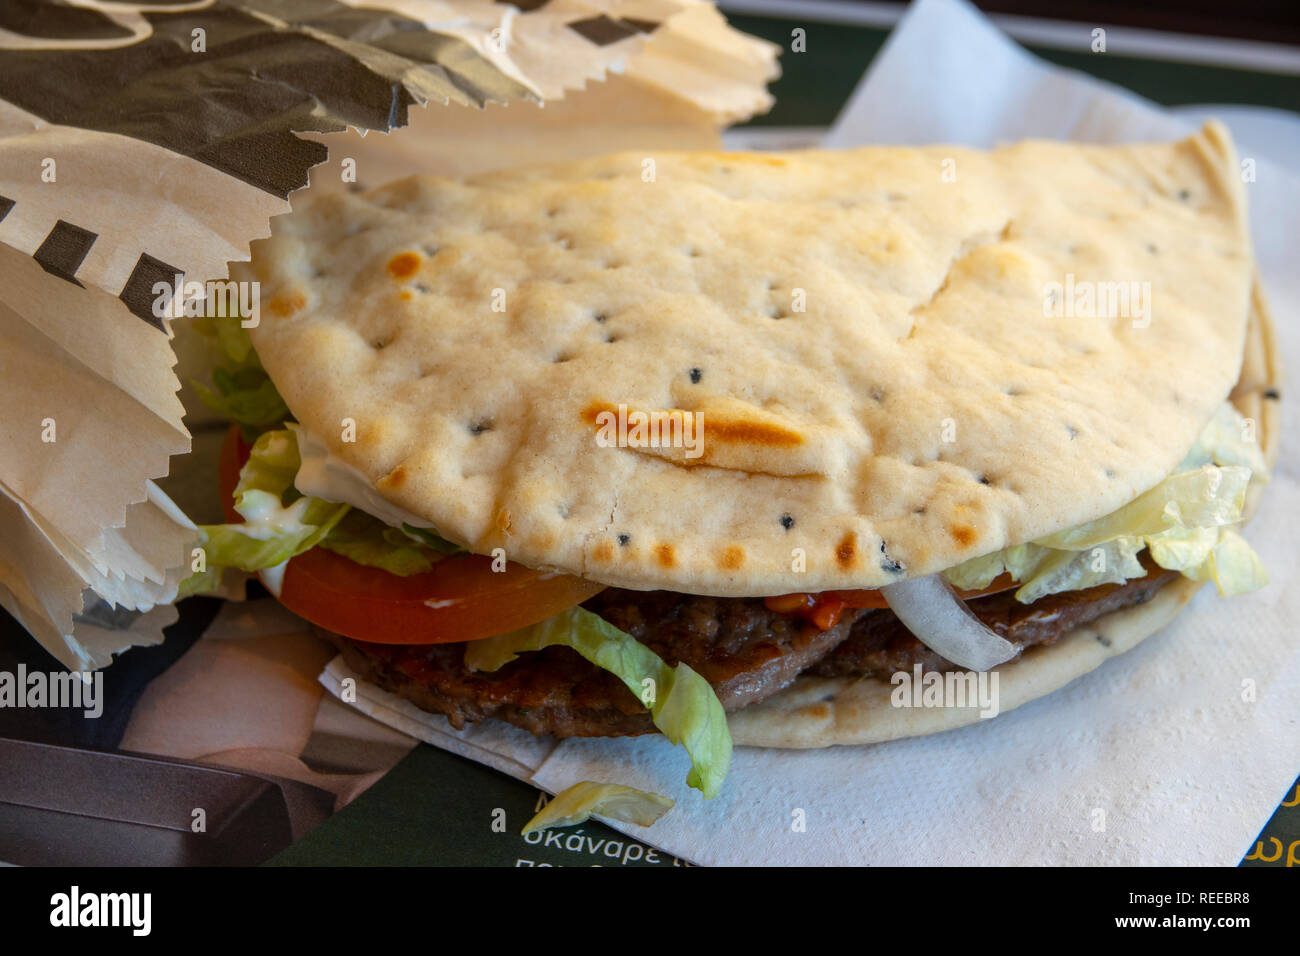 Europe Greece McDonalds restaurant Greek Mac sandwich burgers in a pita Stock Photo